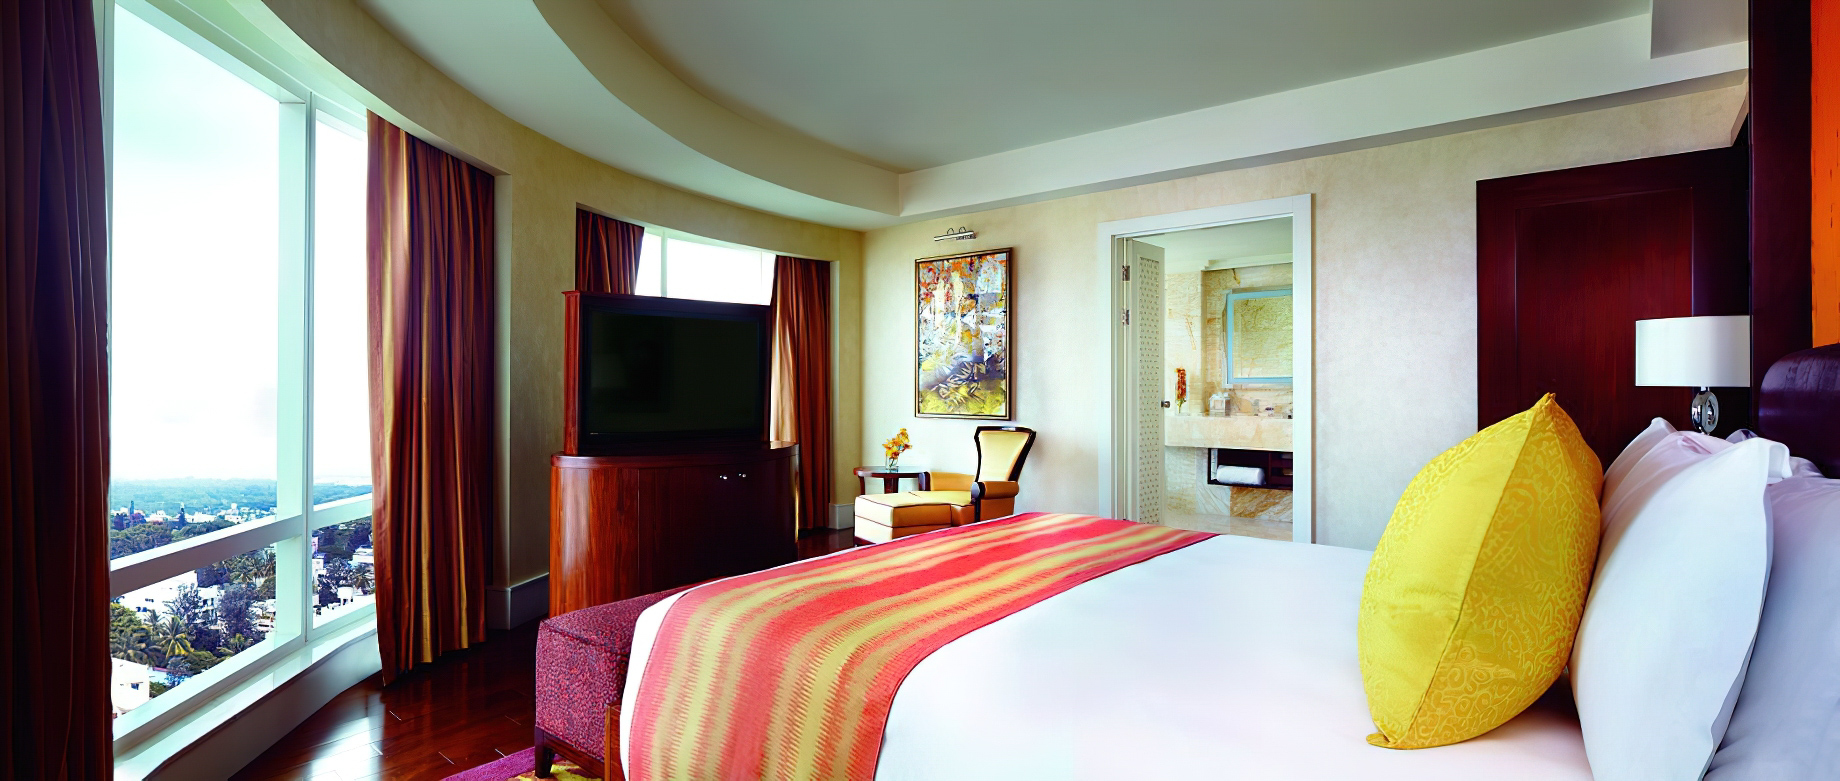 The Ritz-Carlton, Bangalore Hotel – Bangalore, Karnataka, India – Executive Suite